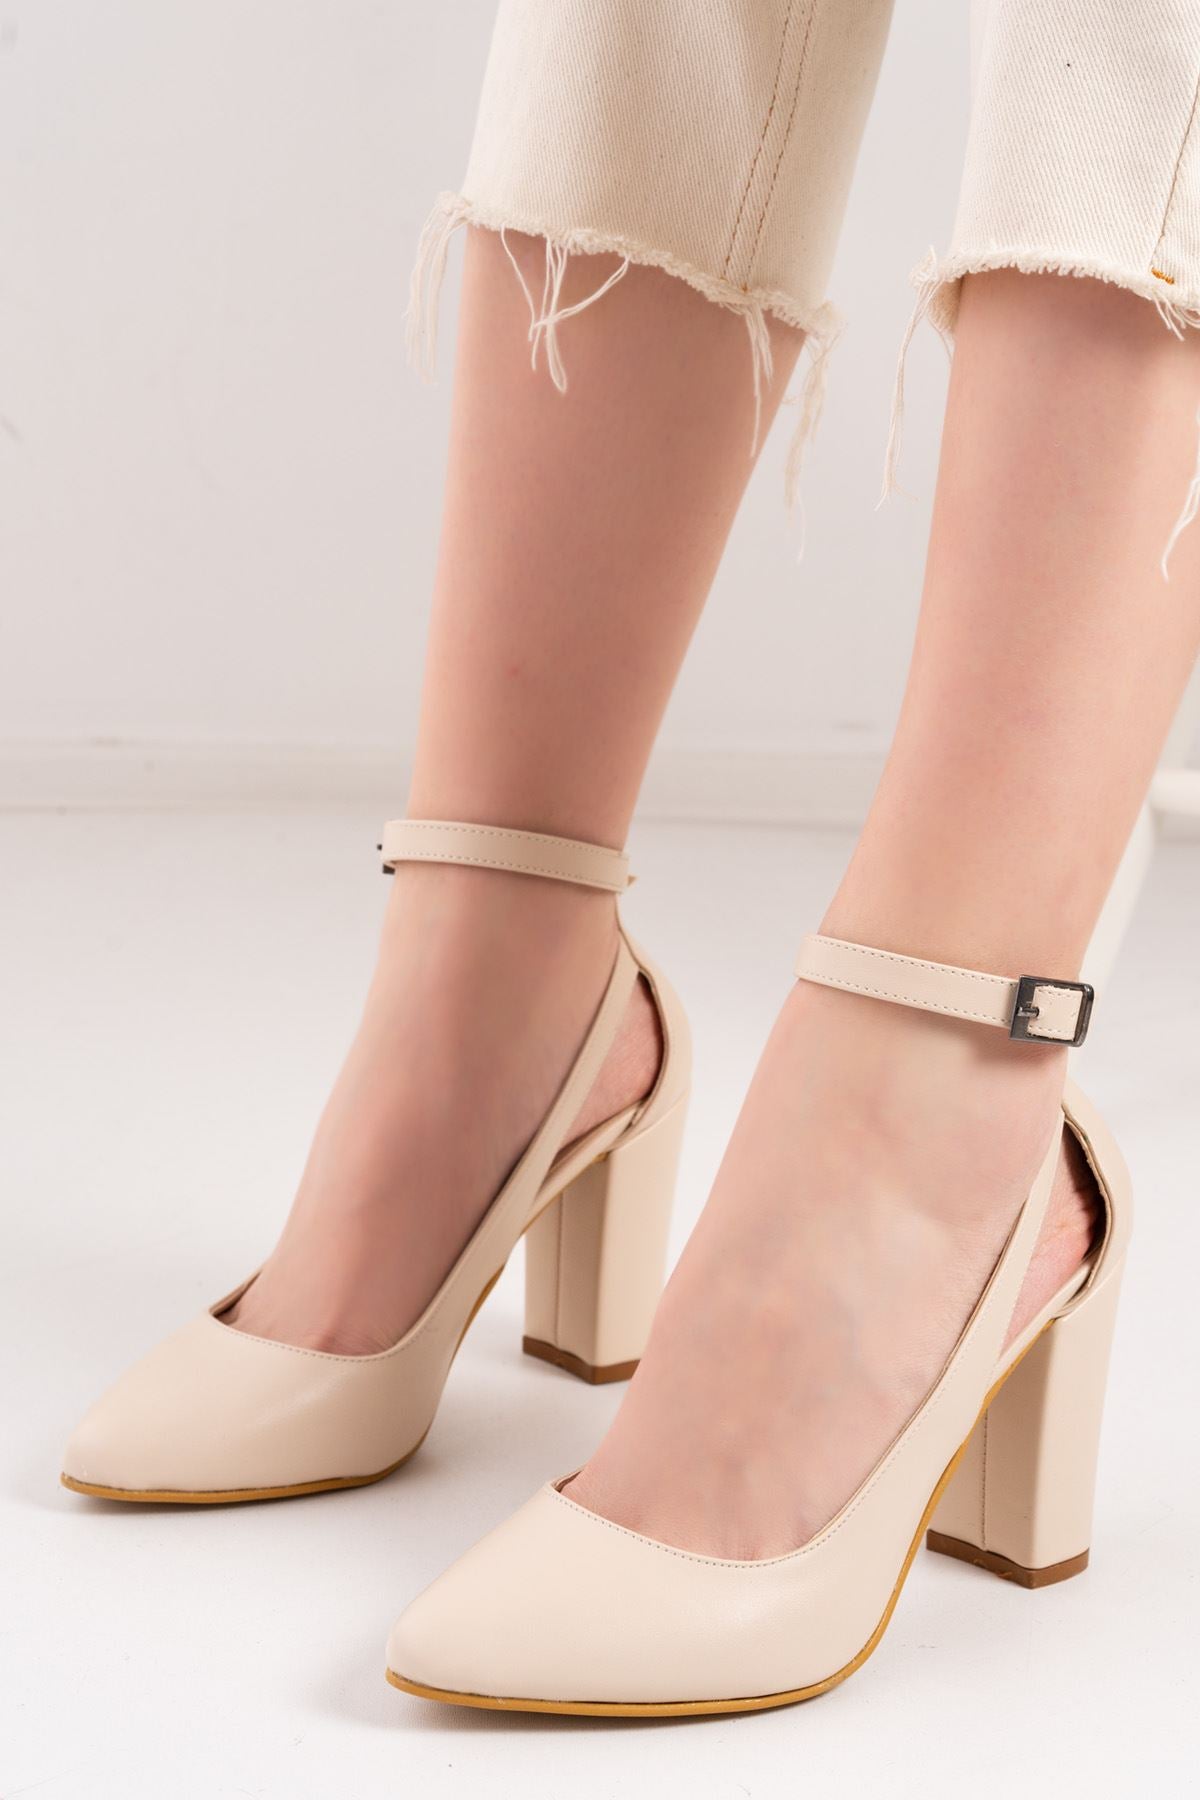 Lillian Heels Cream Skin Heels Women's Shoes - STREETMODE™